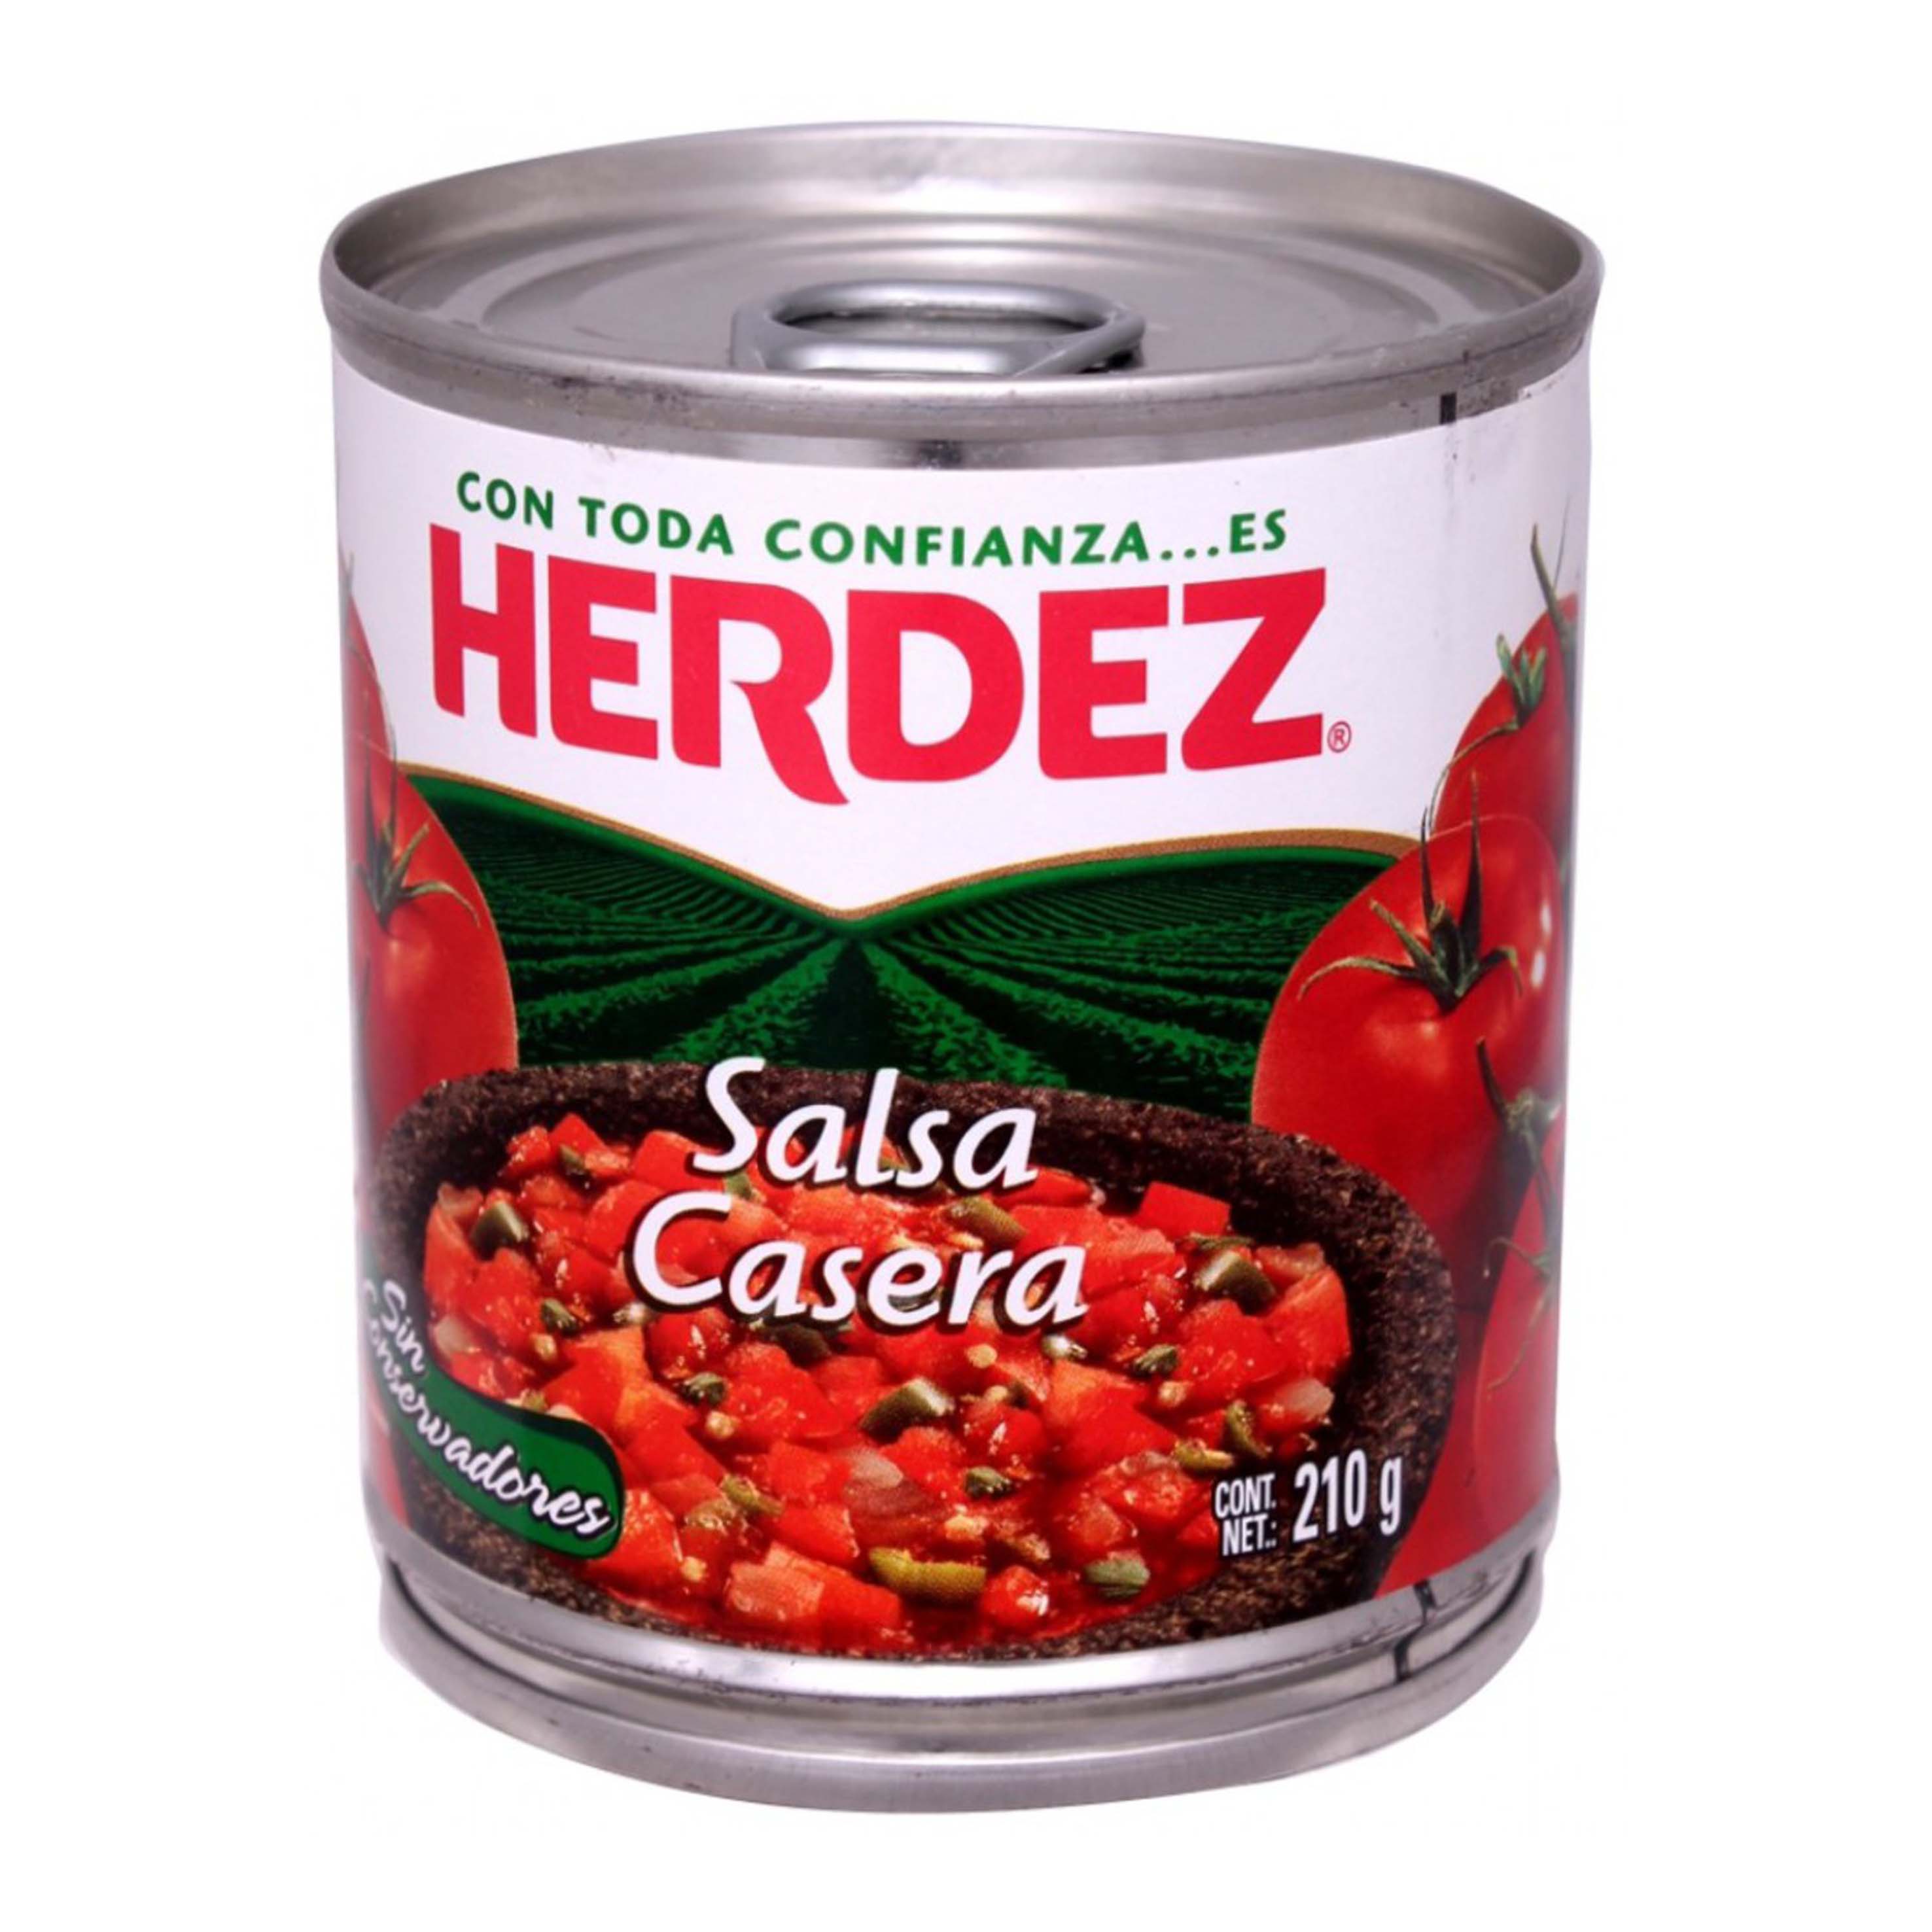 Herdez salsa casera 24/210g lata